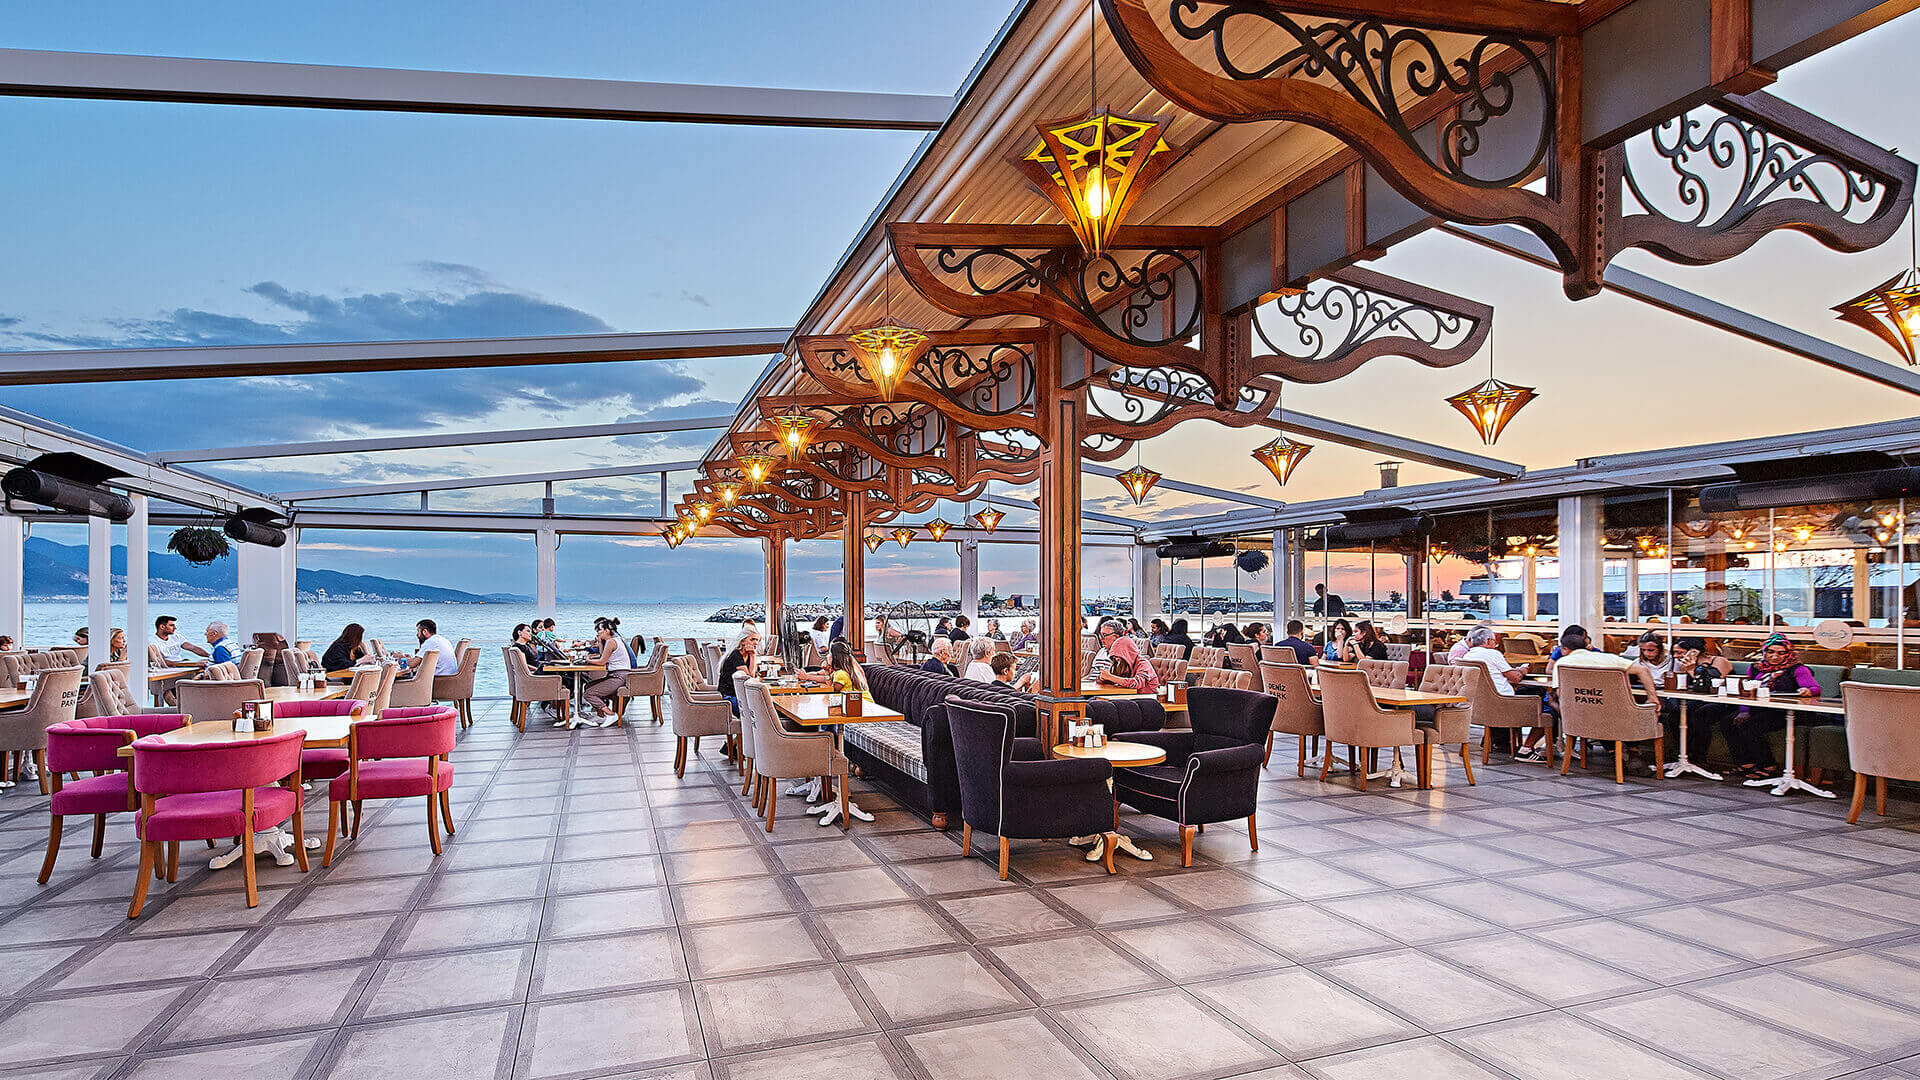 Deniz Restaurant and Cafe best seafood restaurants in Dubai